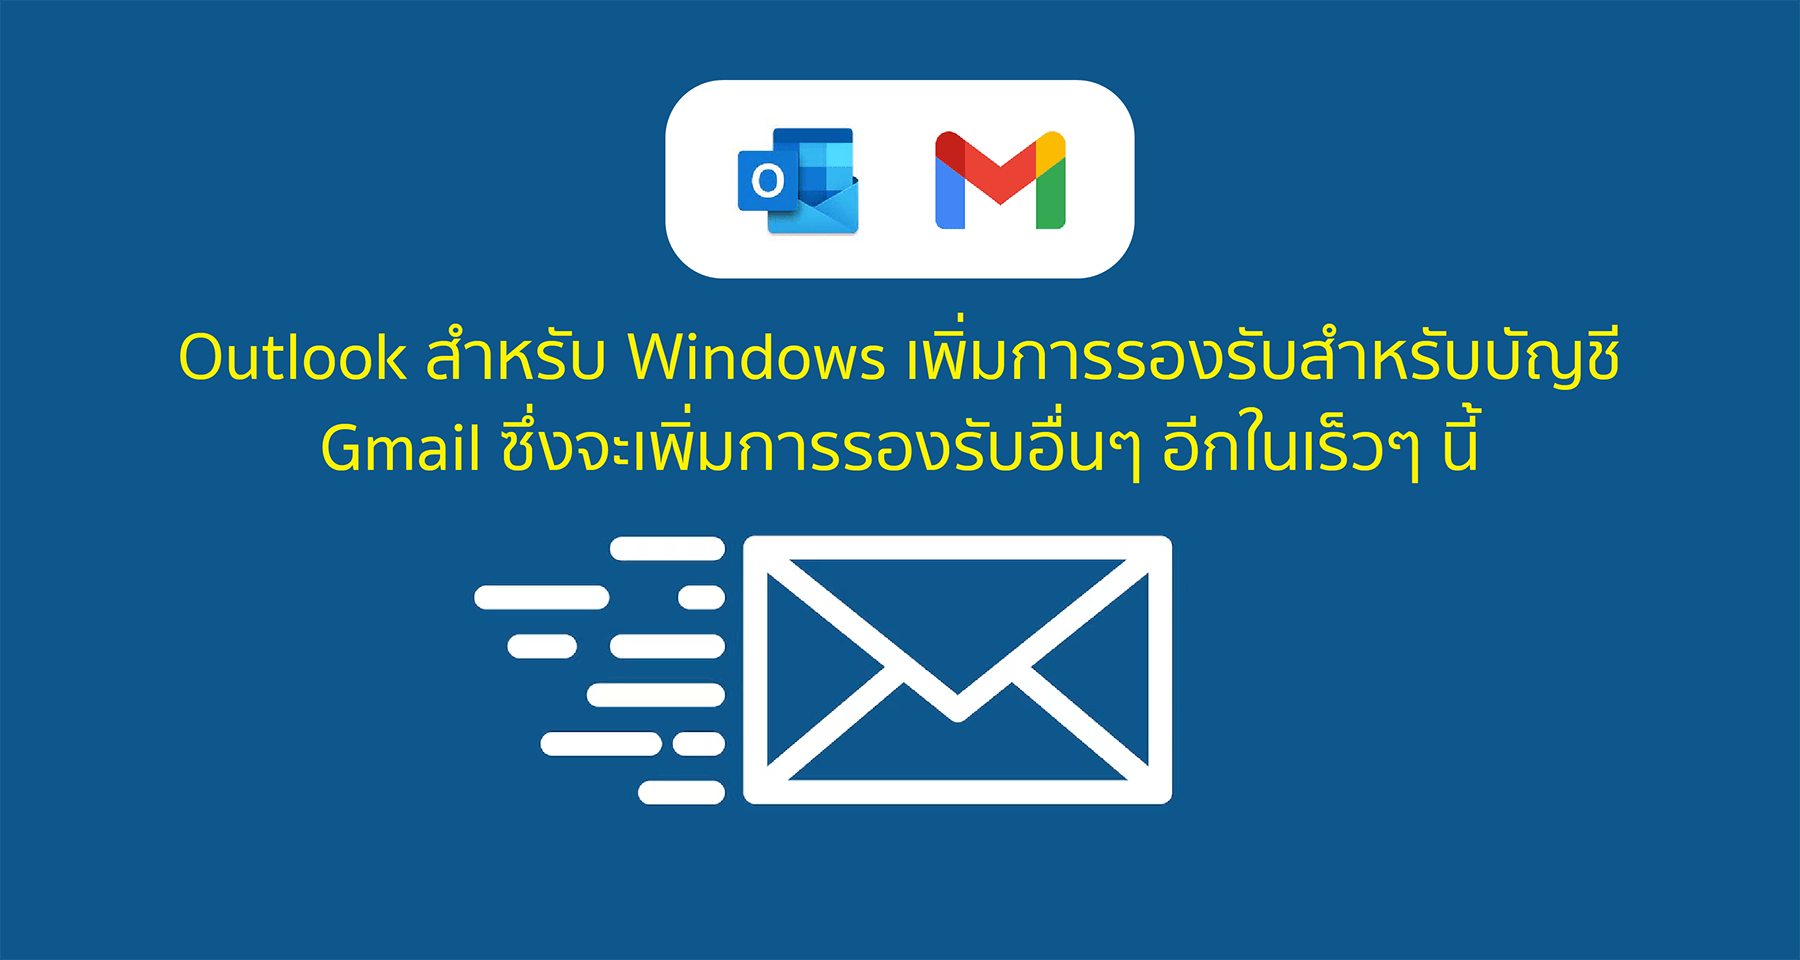 Outlook สำหรับ Windows เพิ่มการรองรับสำหรับบัญชี Gmail ซึ่งจะเพิ่มการรองรับอื่นๆ อีกในเร็วๆ นี้